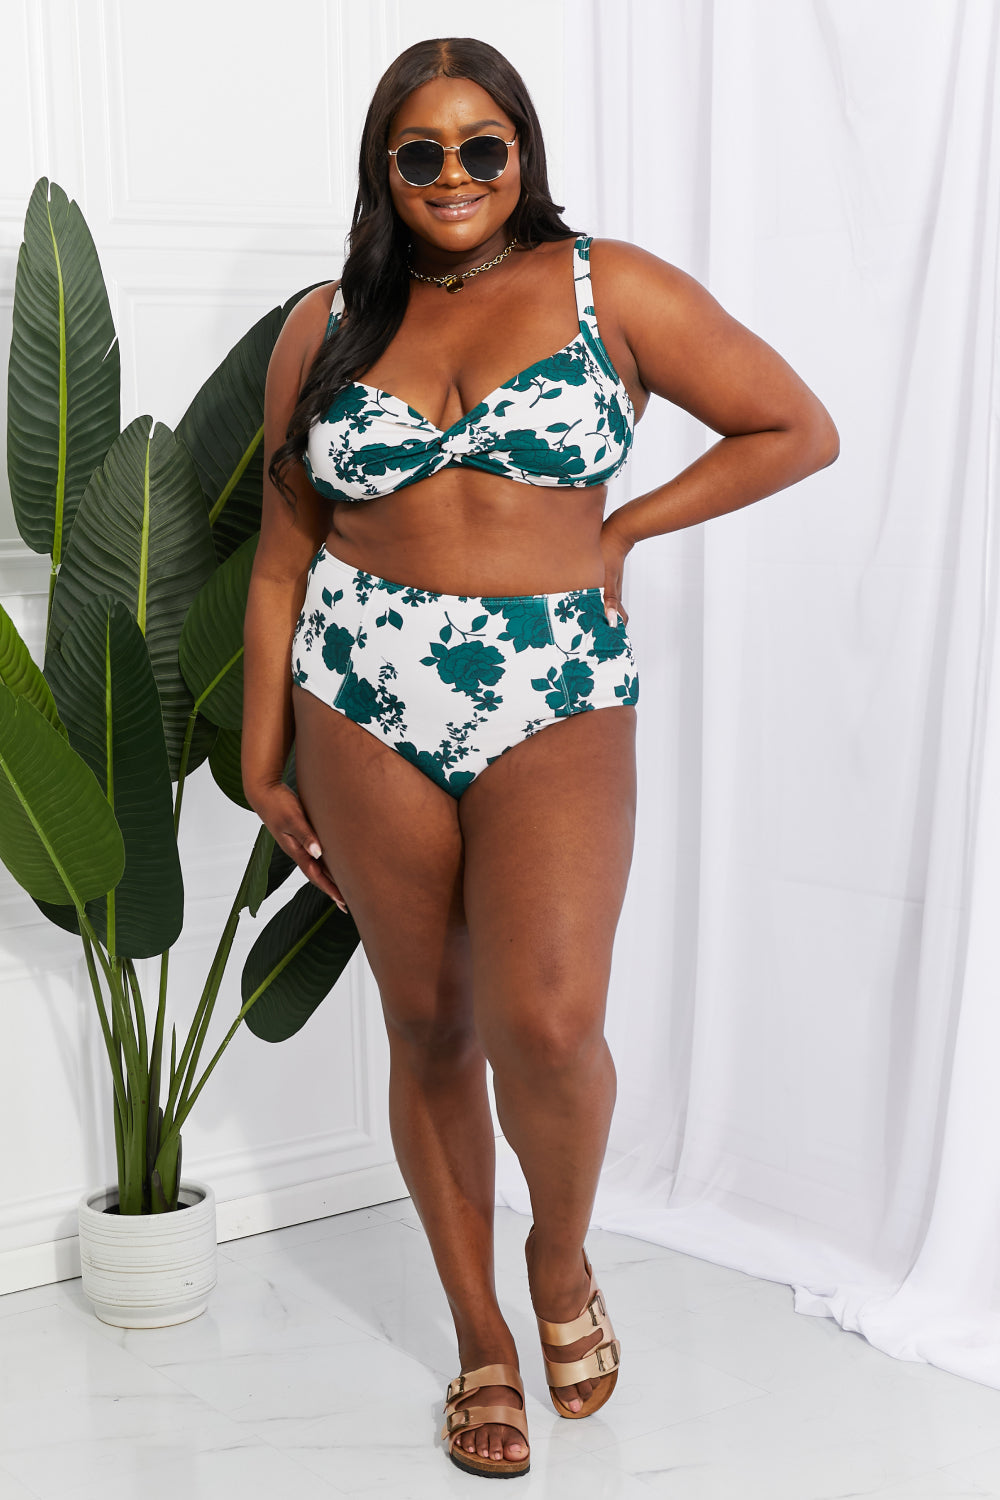 Marina West Swim Take A Dip Twist High-Rise Bikini in Forest Print on any thing USA/STOD clothes